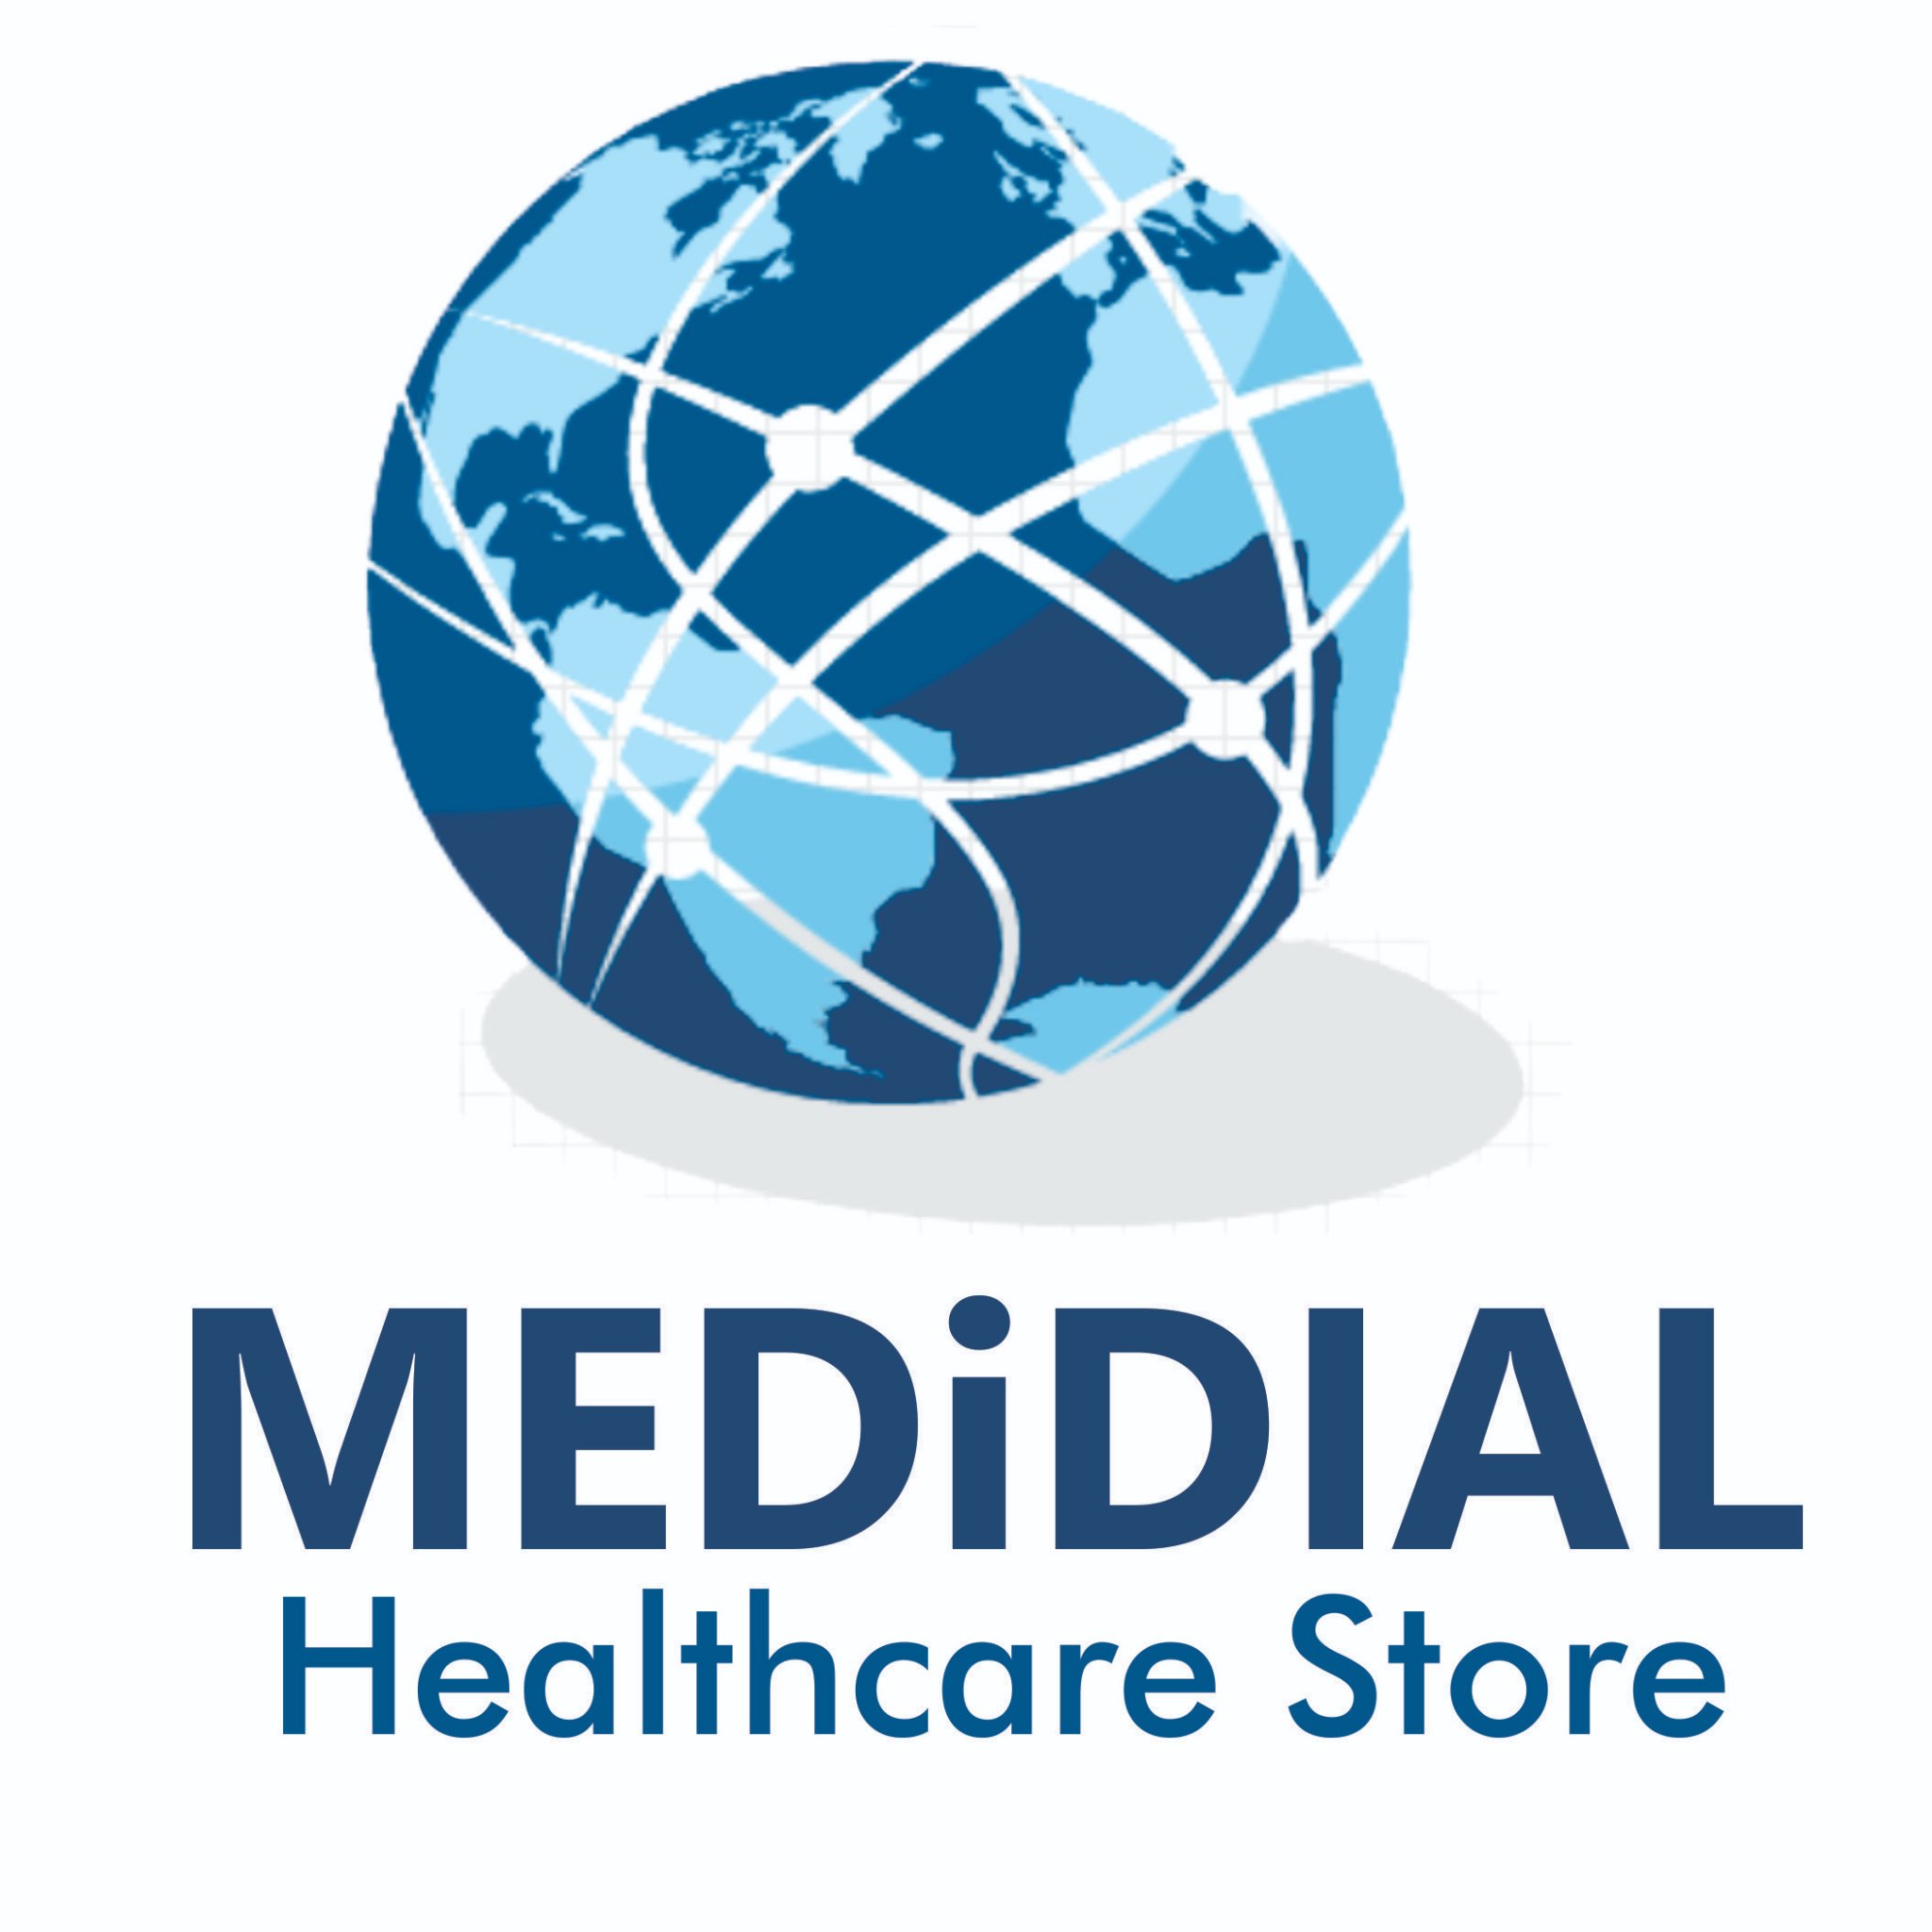 MEDiDIAL Healthcare Store